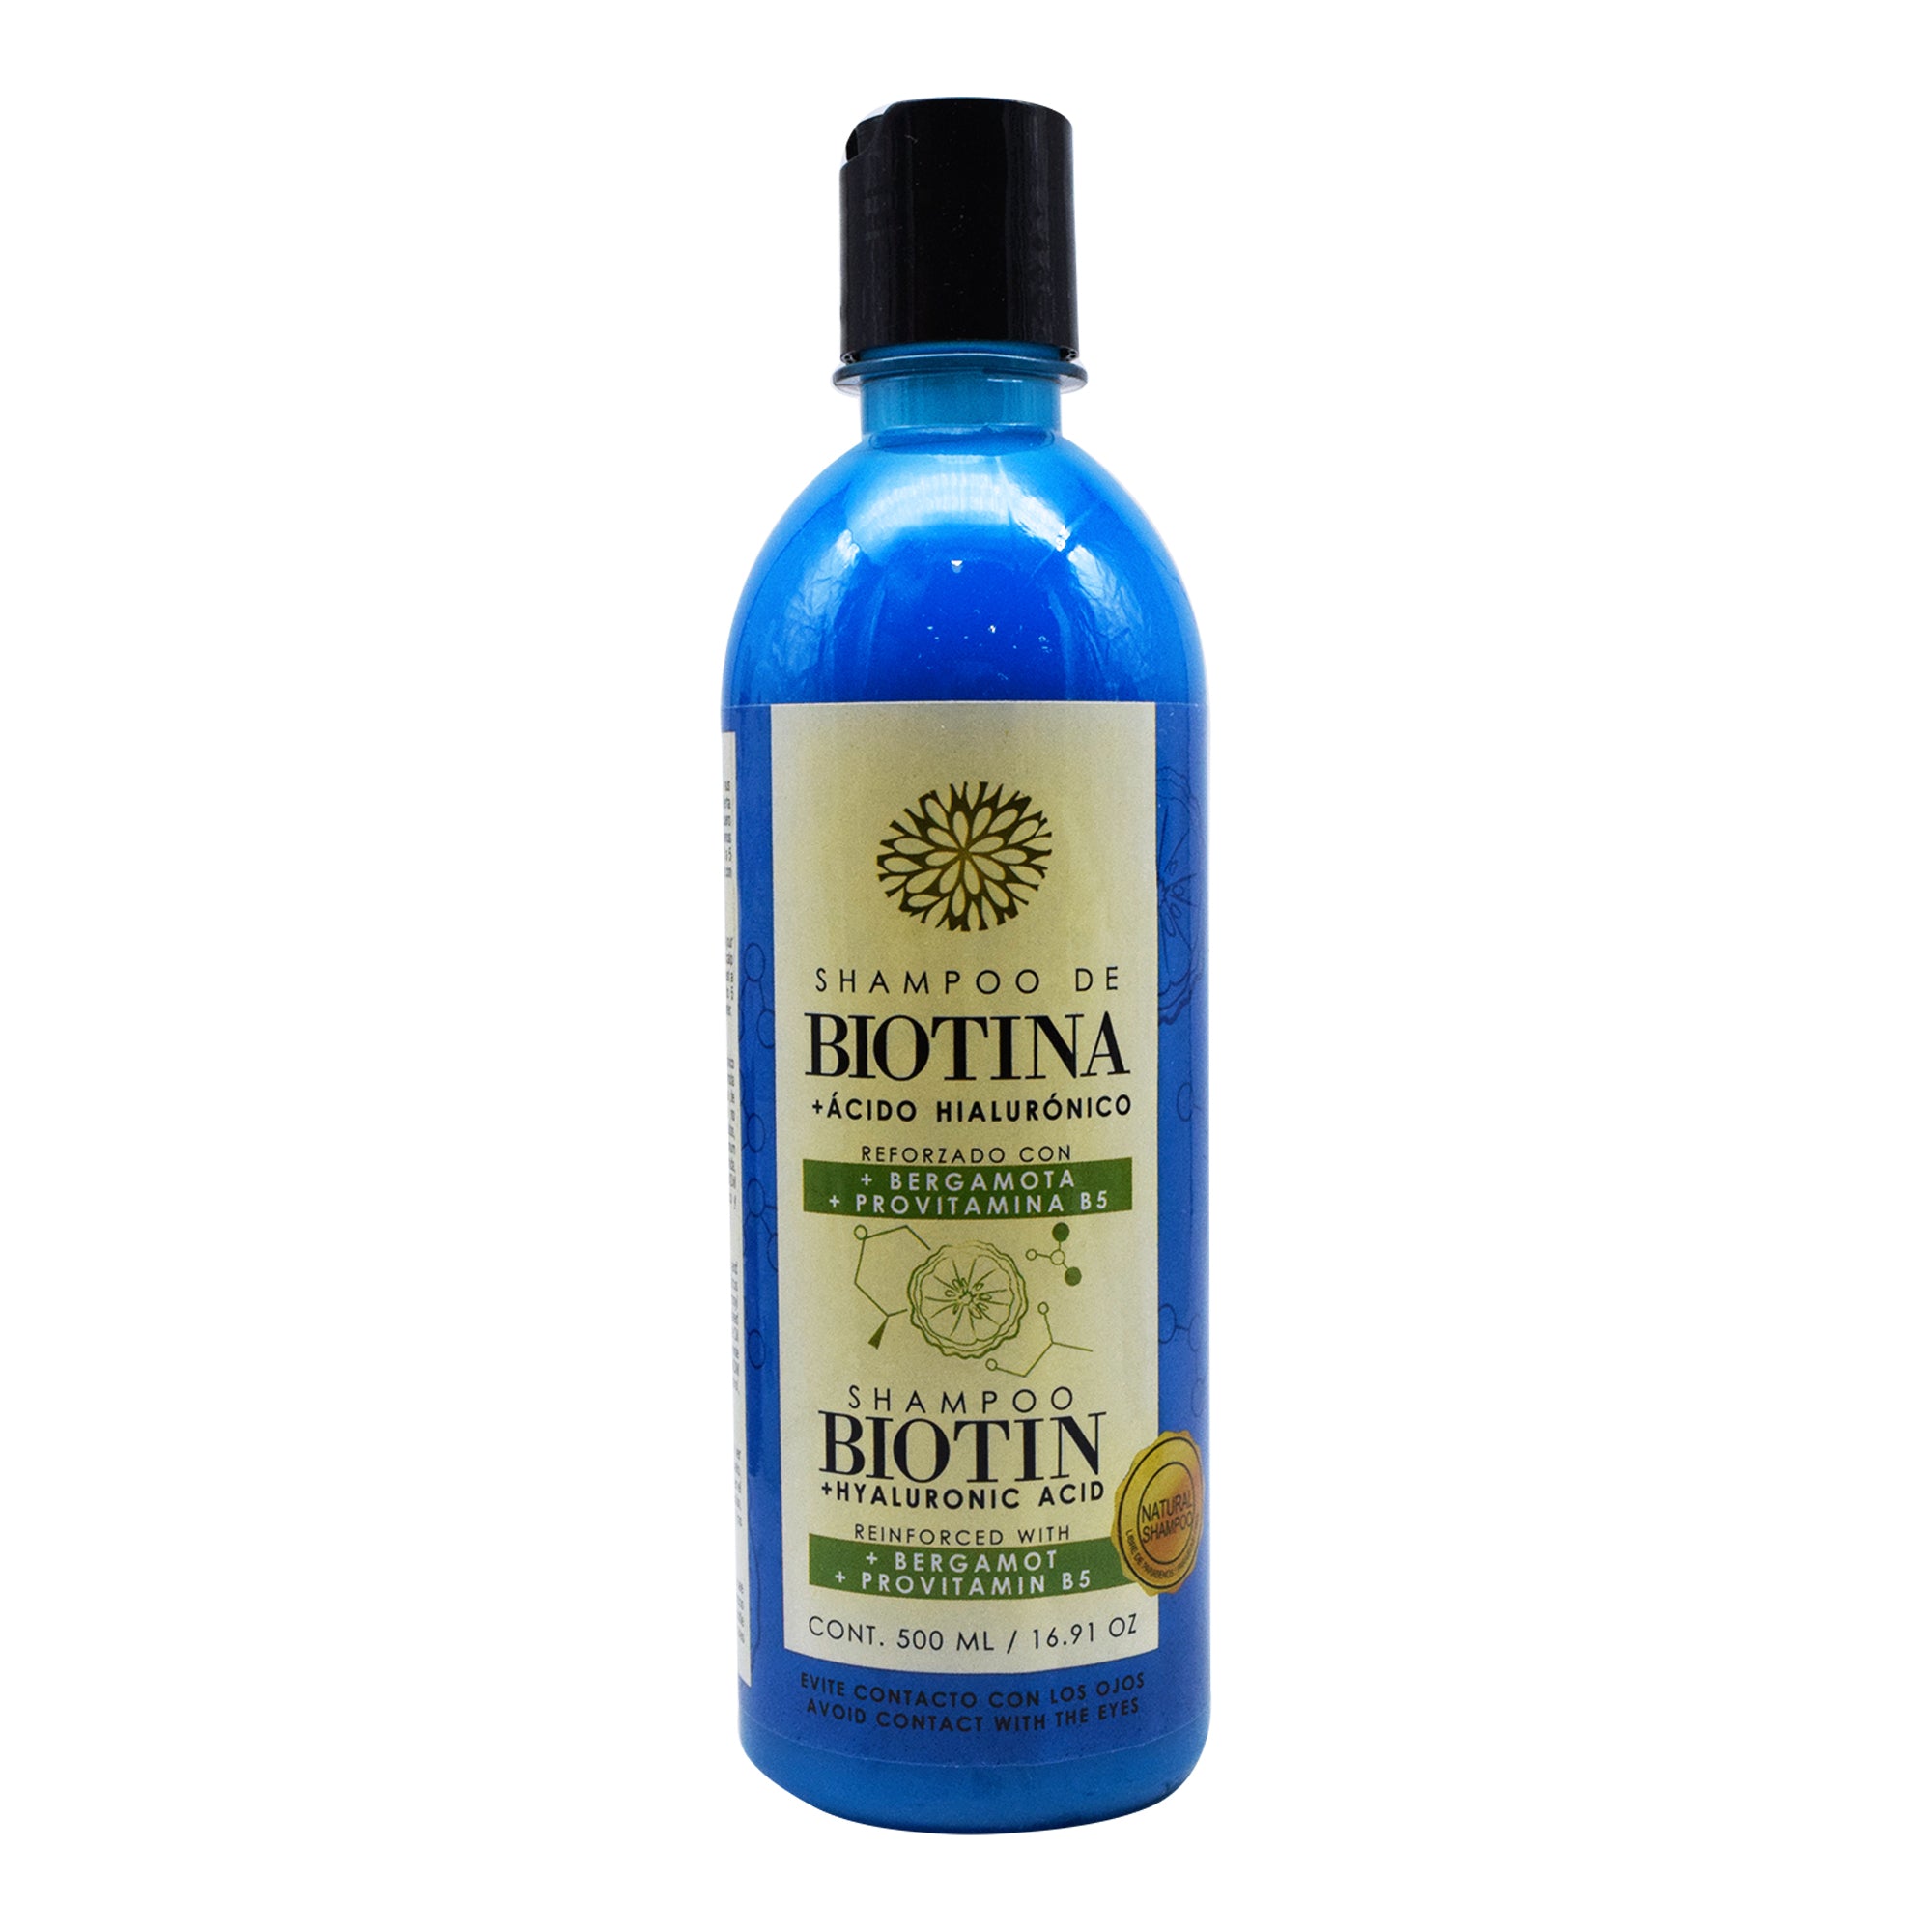 Shampoo de biotina y acido hialuronico 500 ml